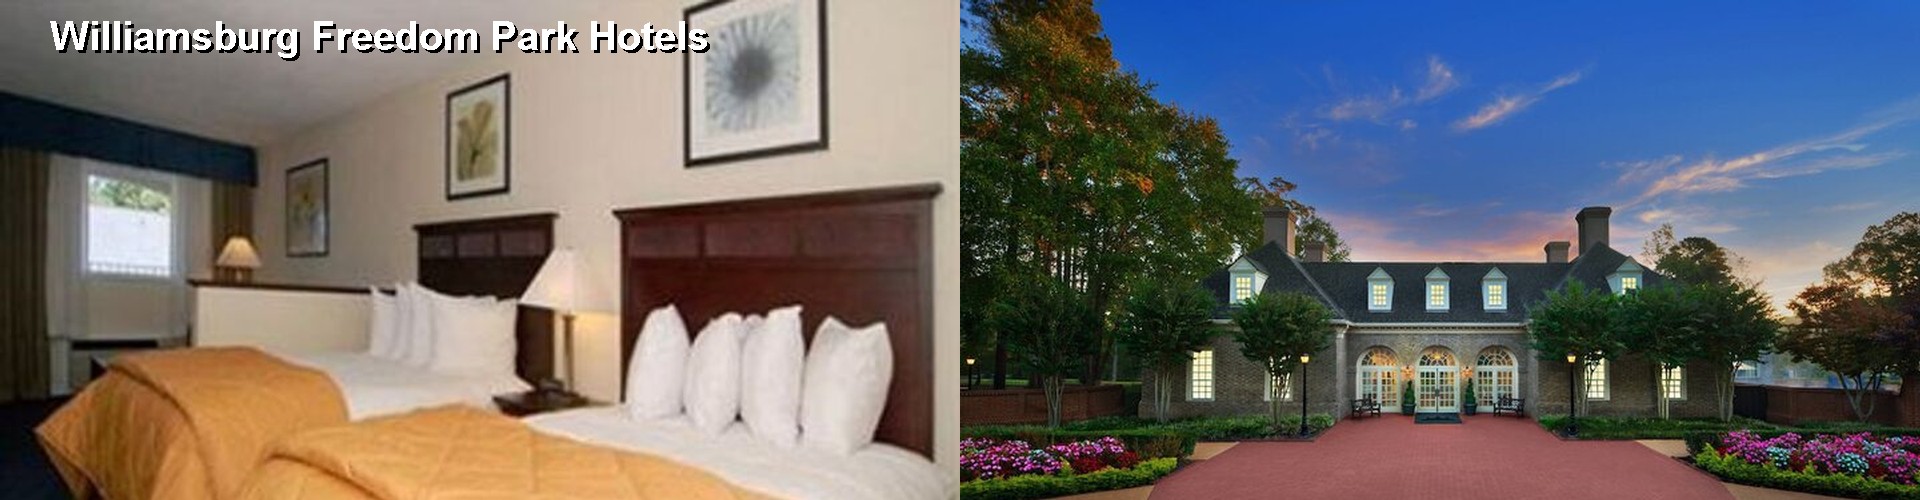 5 Best Hotels near Williamsburg Freedom Park